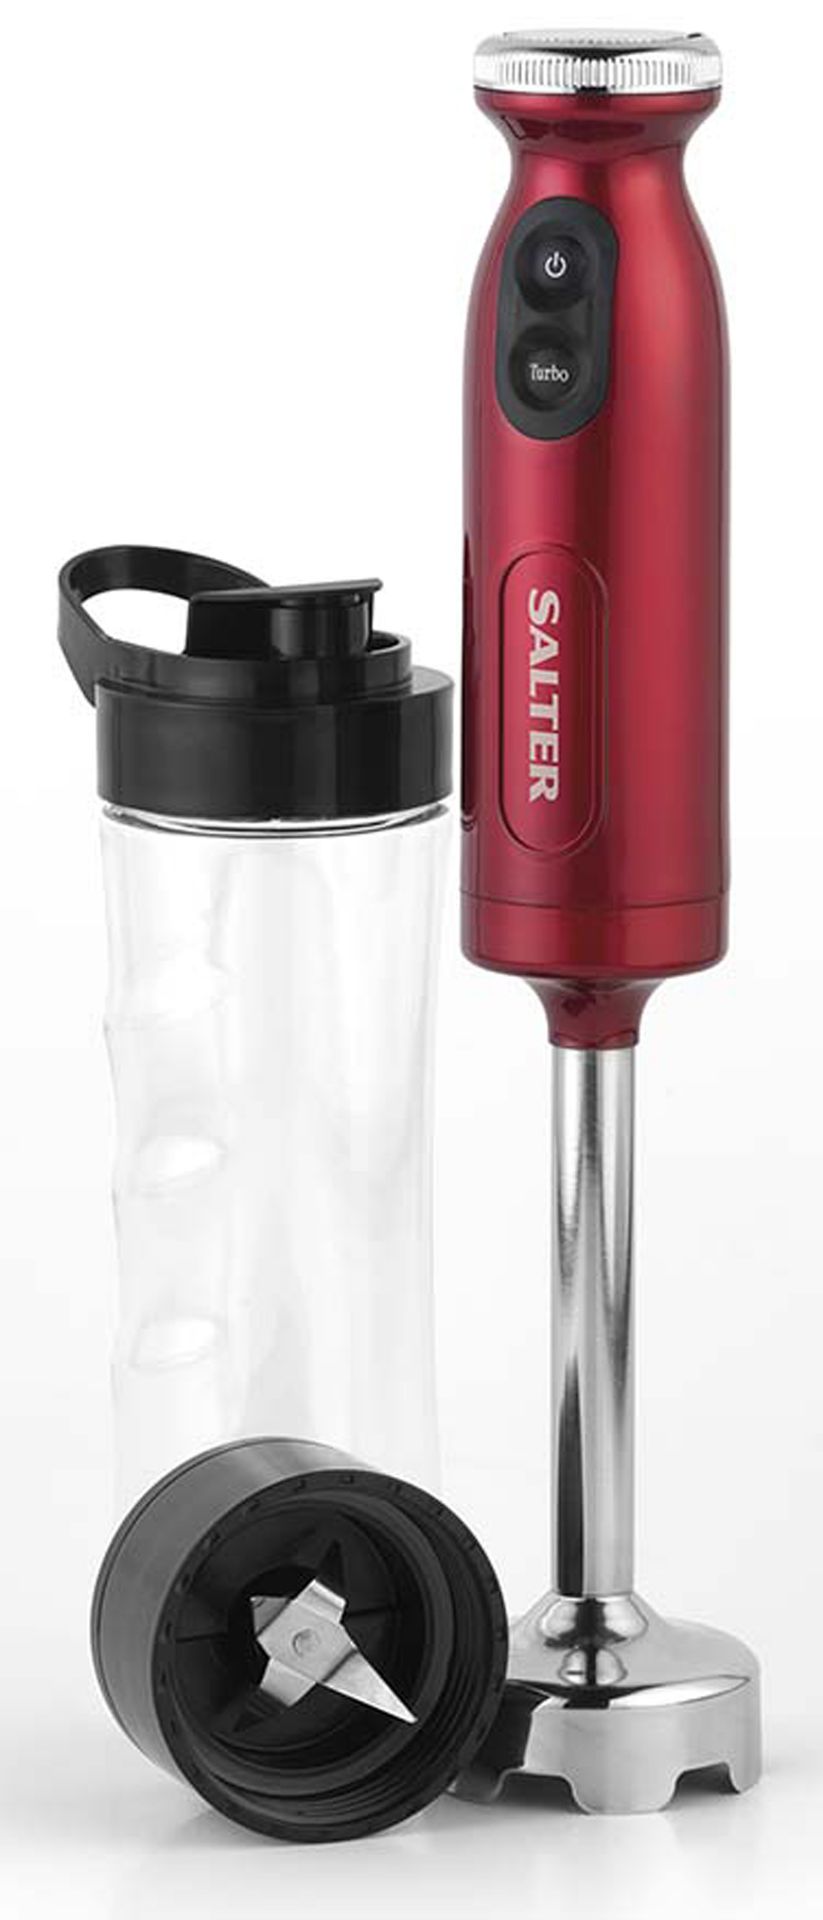 V *TRADE QTY* Brand New Salter NutriTwist Stick Blender With 500watt Motor - Adjustable Speed - - Image 2 of 2